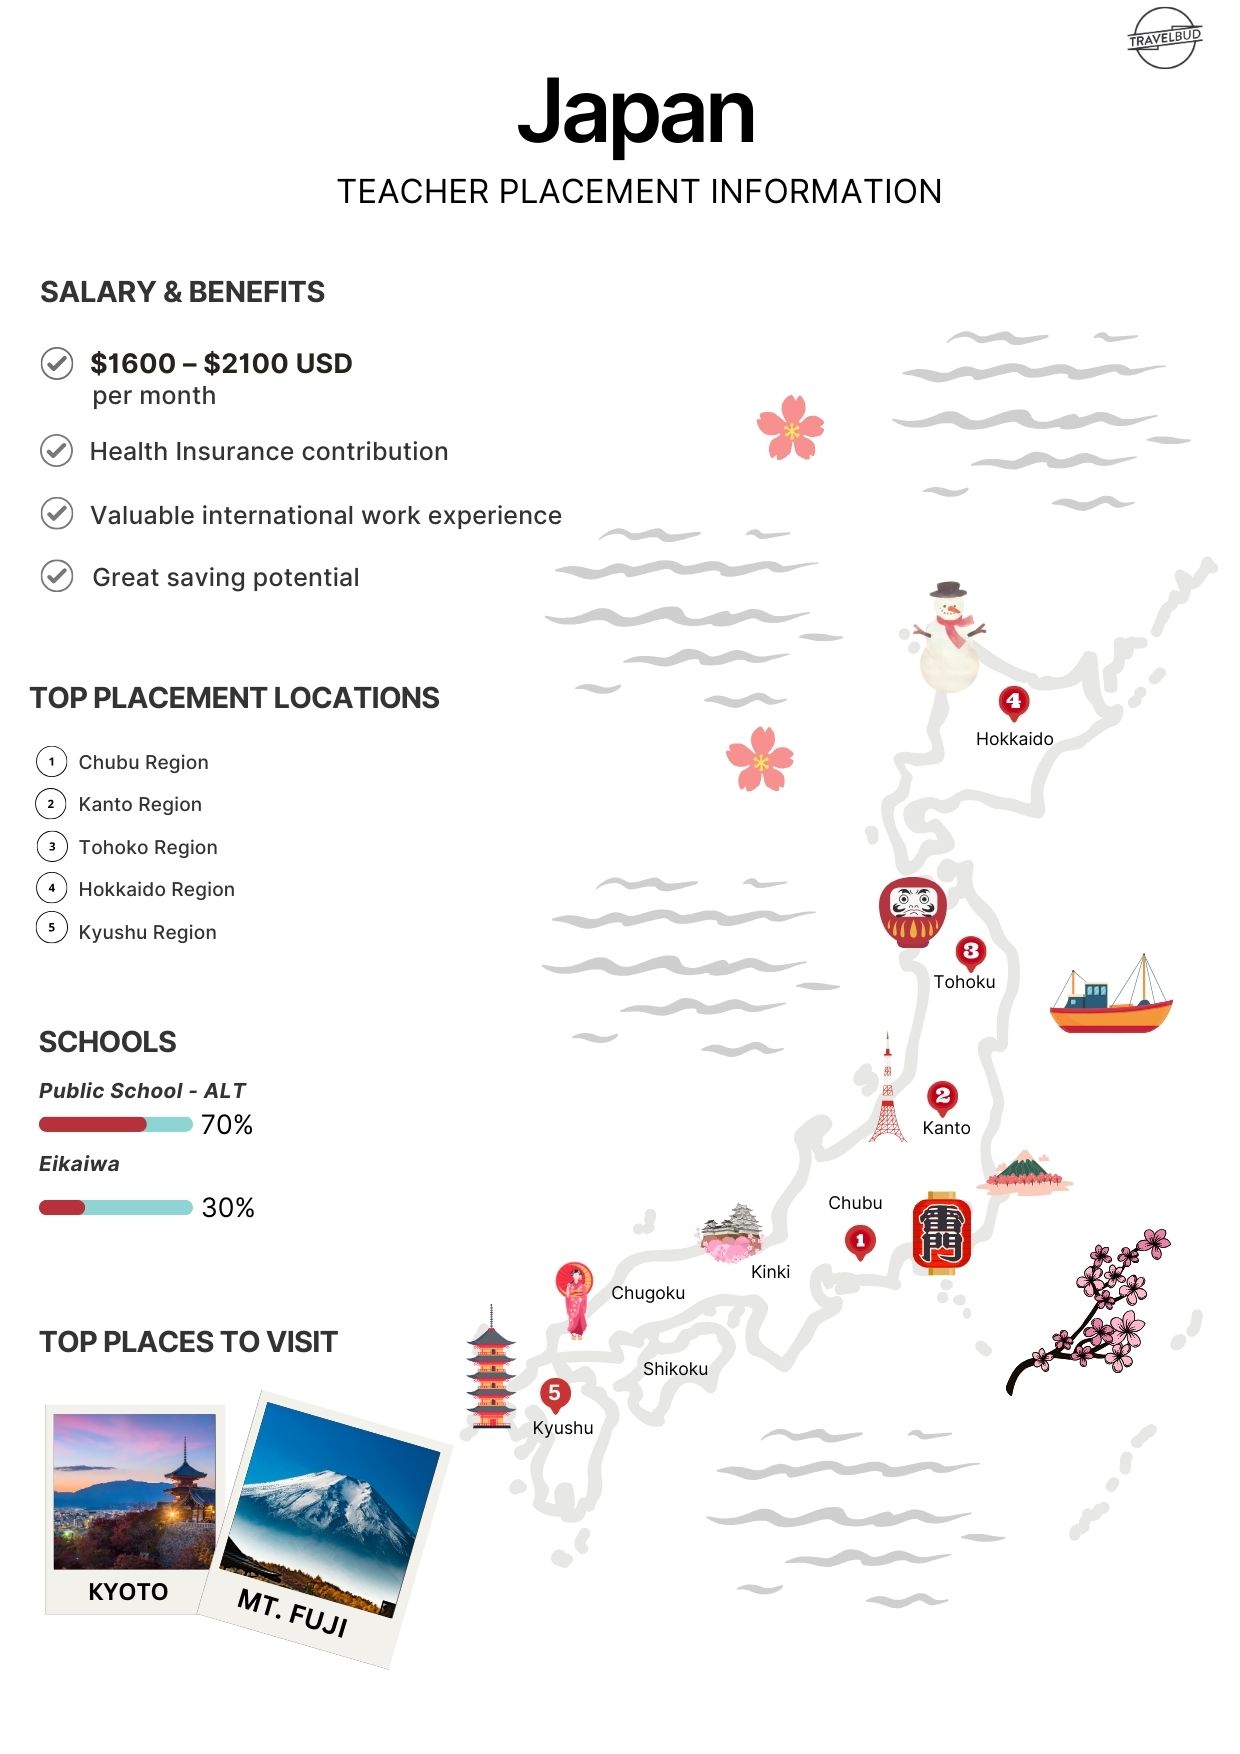 Japan Teacher Placement Information Infographic